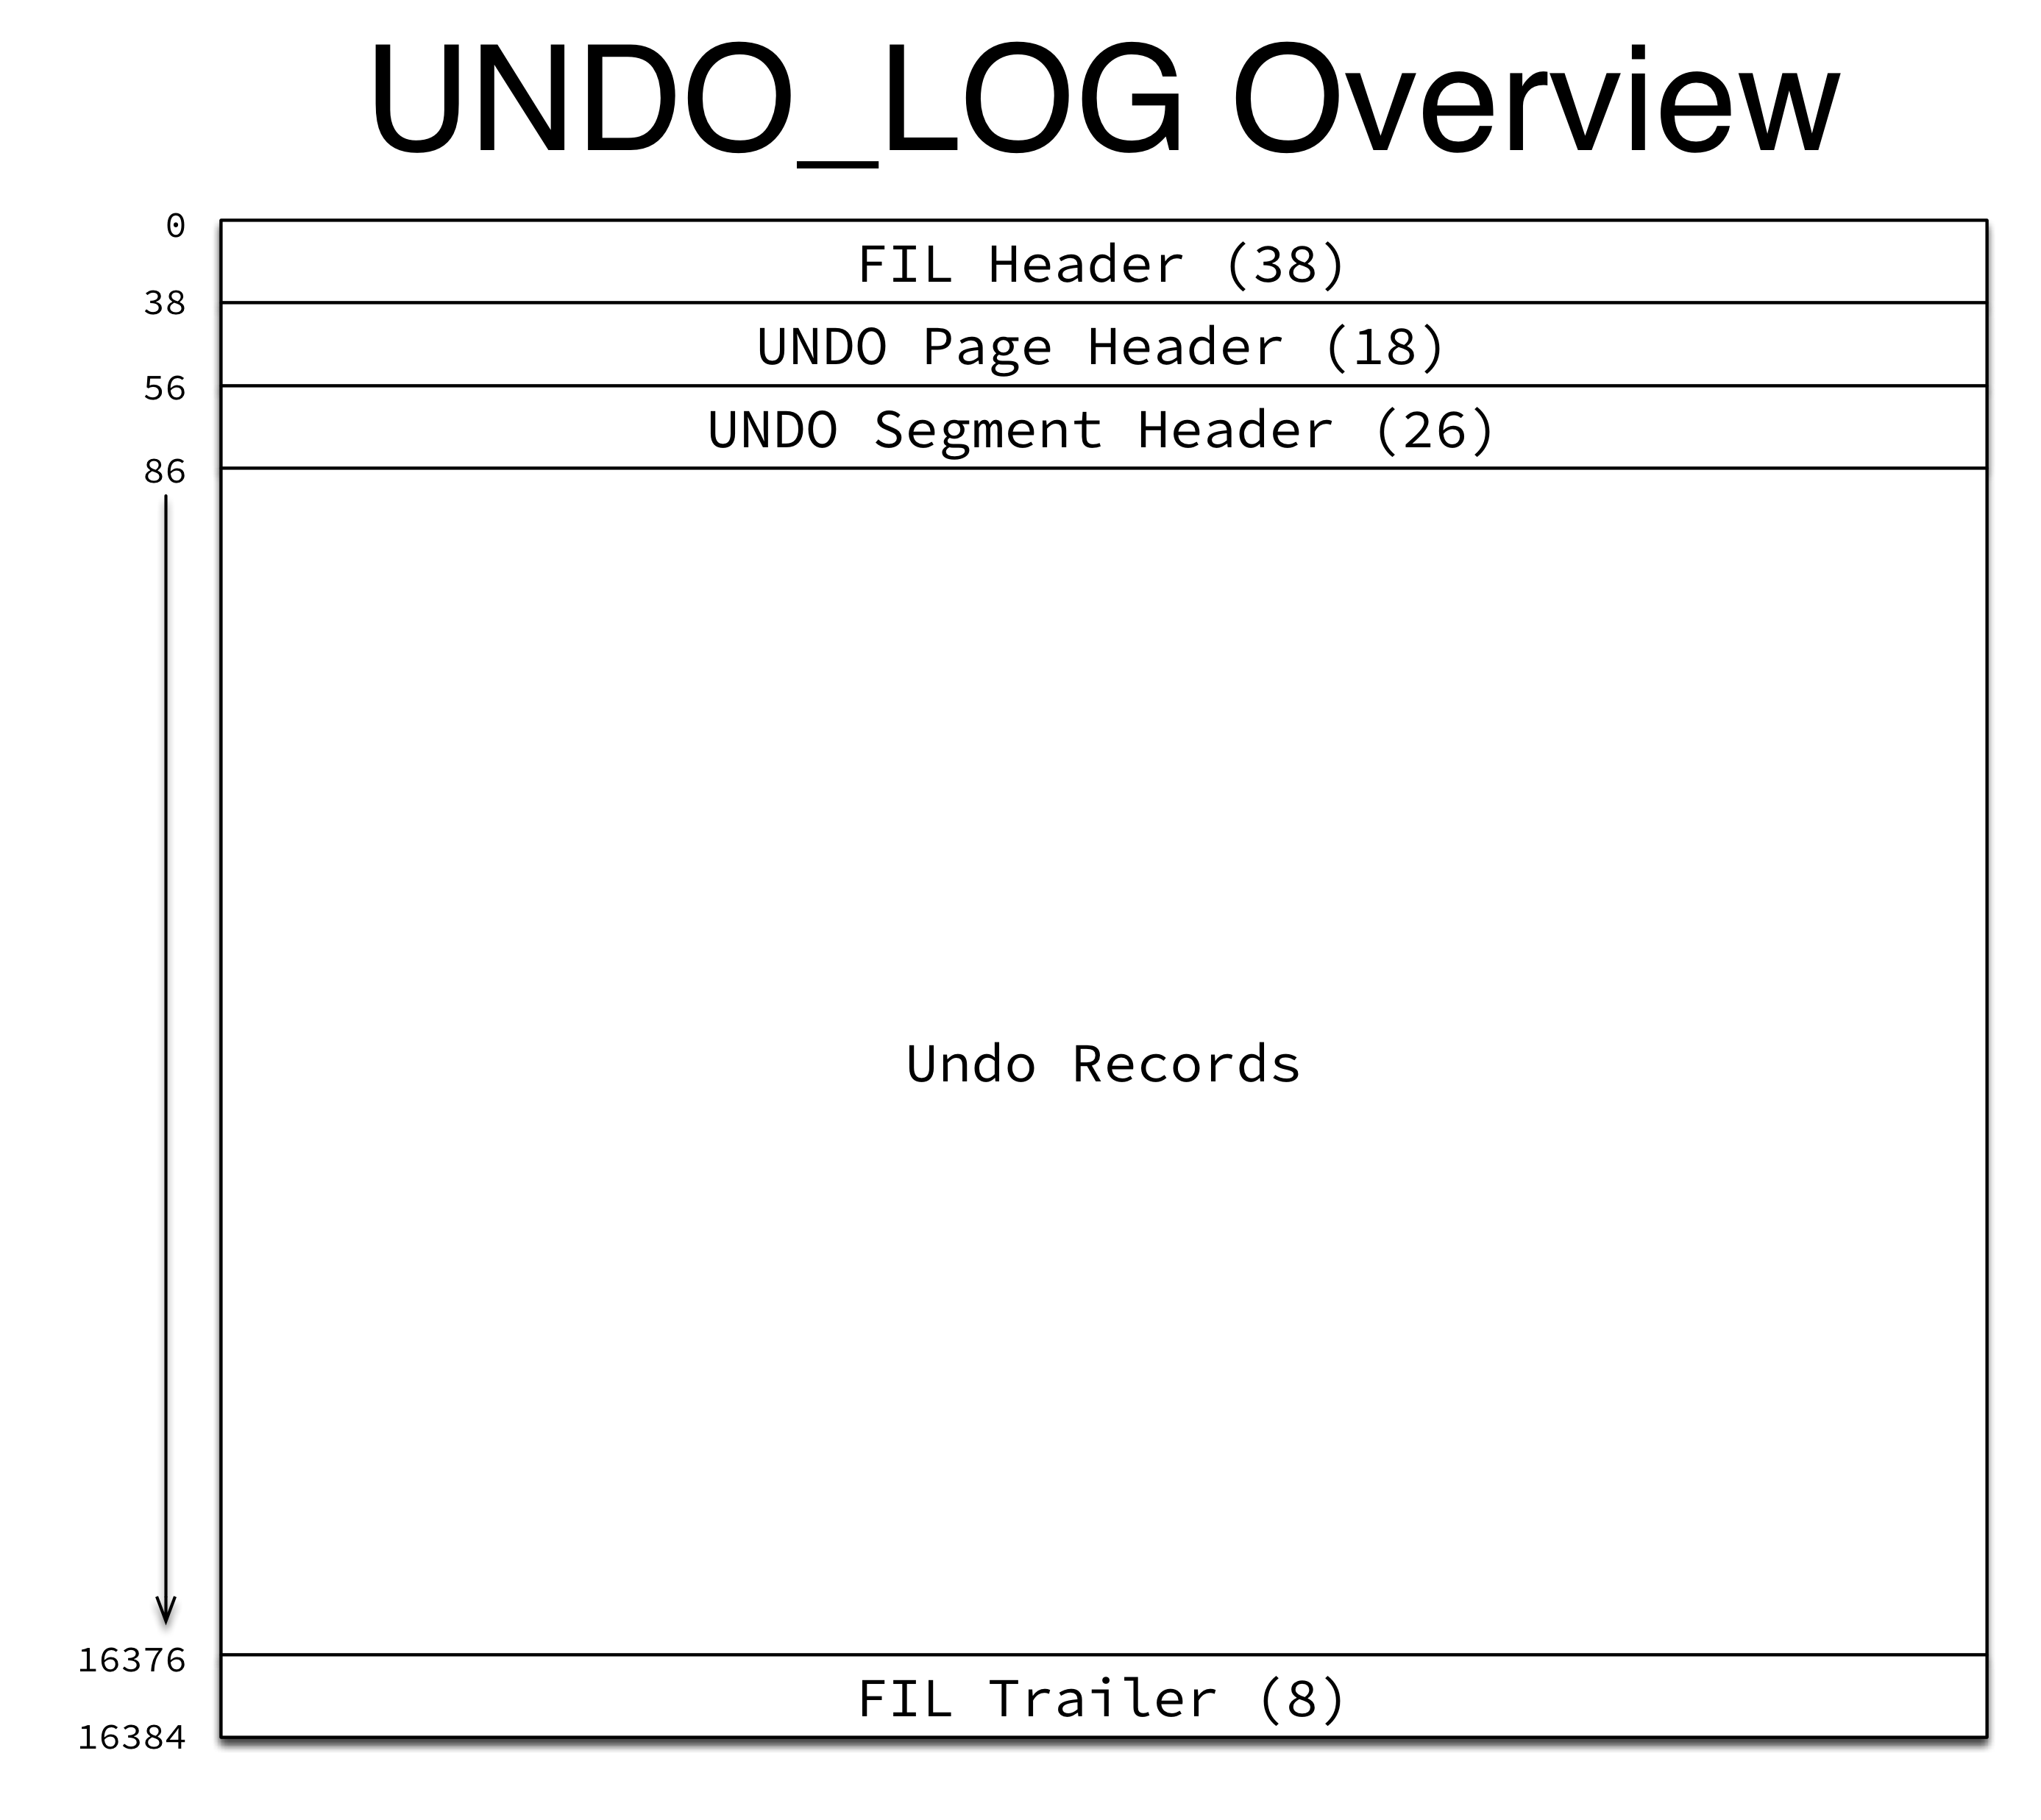 UNDO_LOG Overview